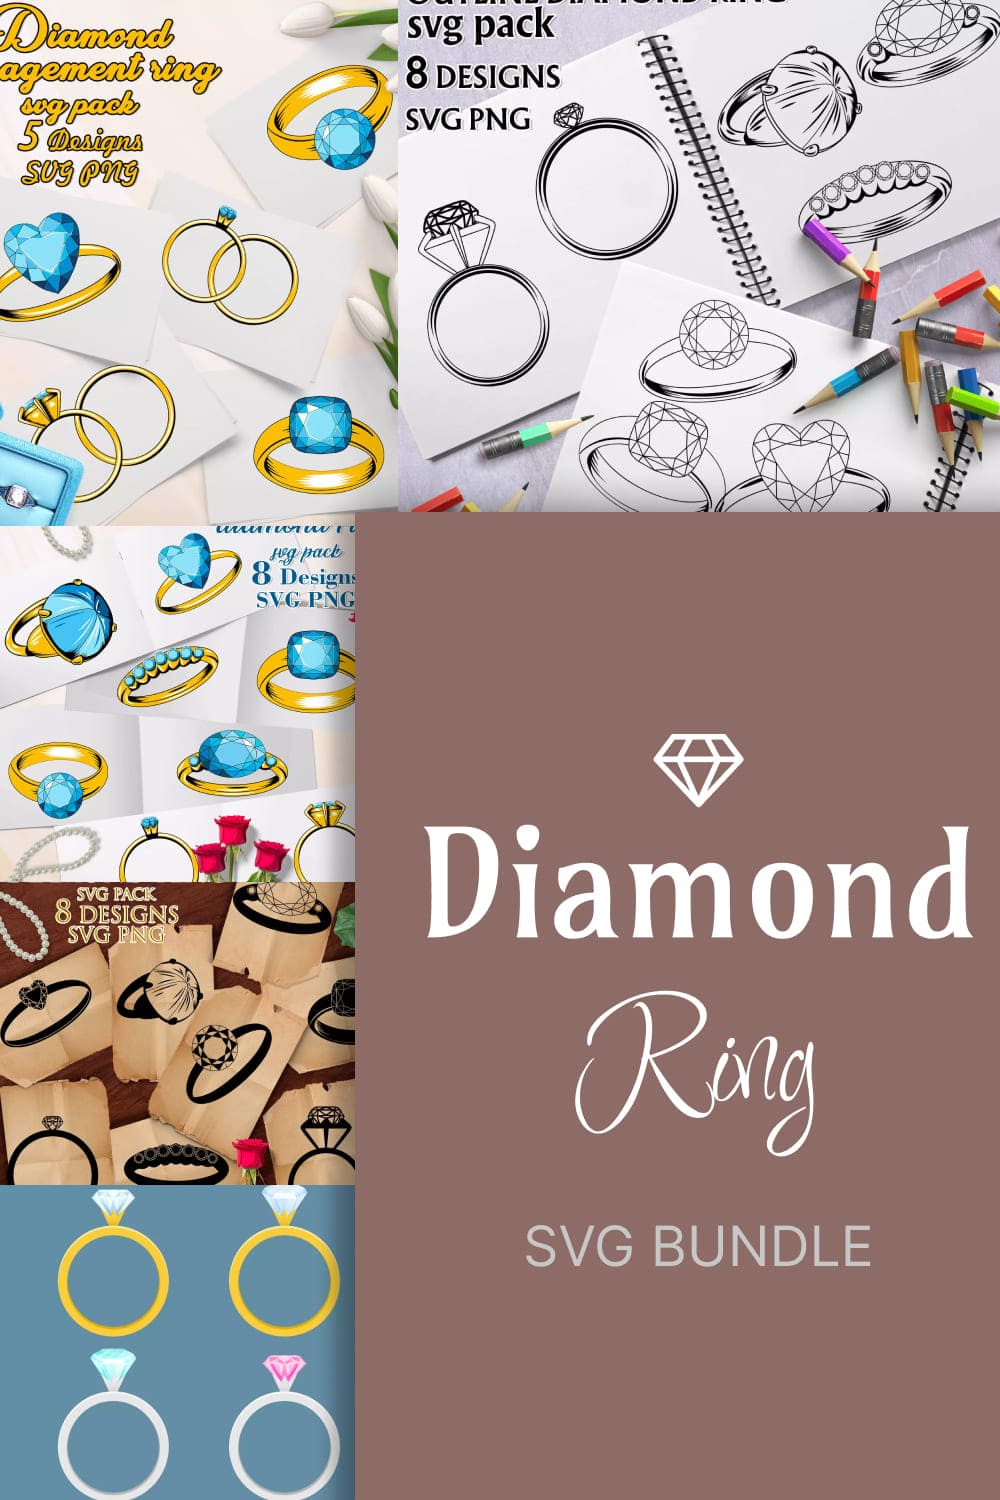 Diamond ring svg bundle, picture for pinterest.